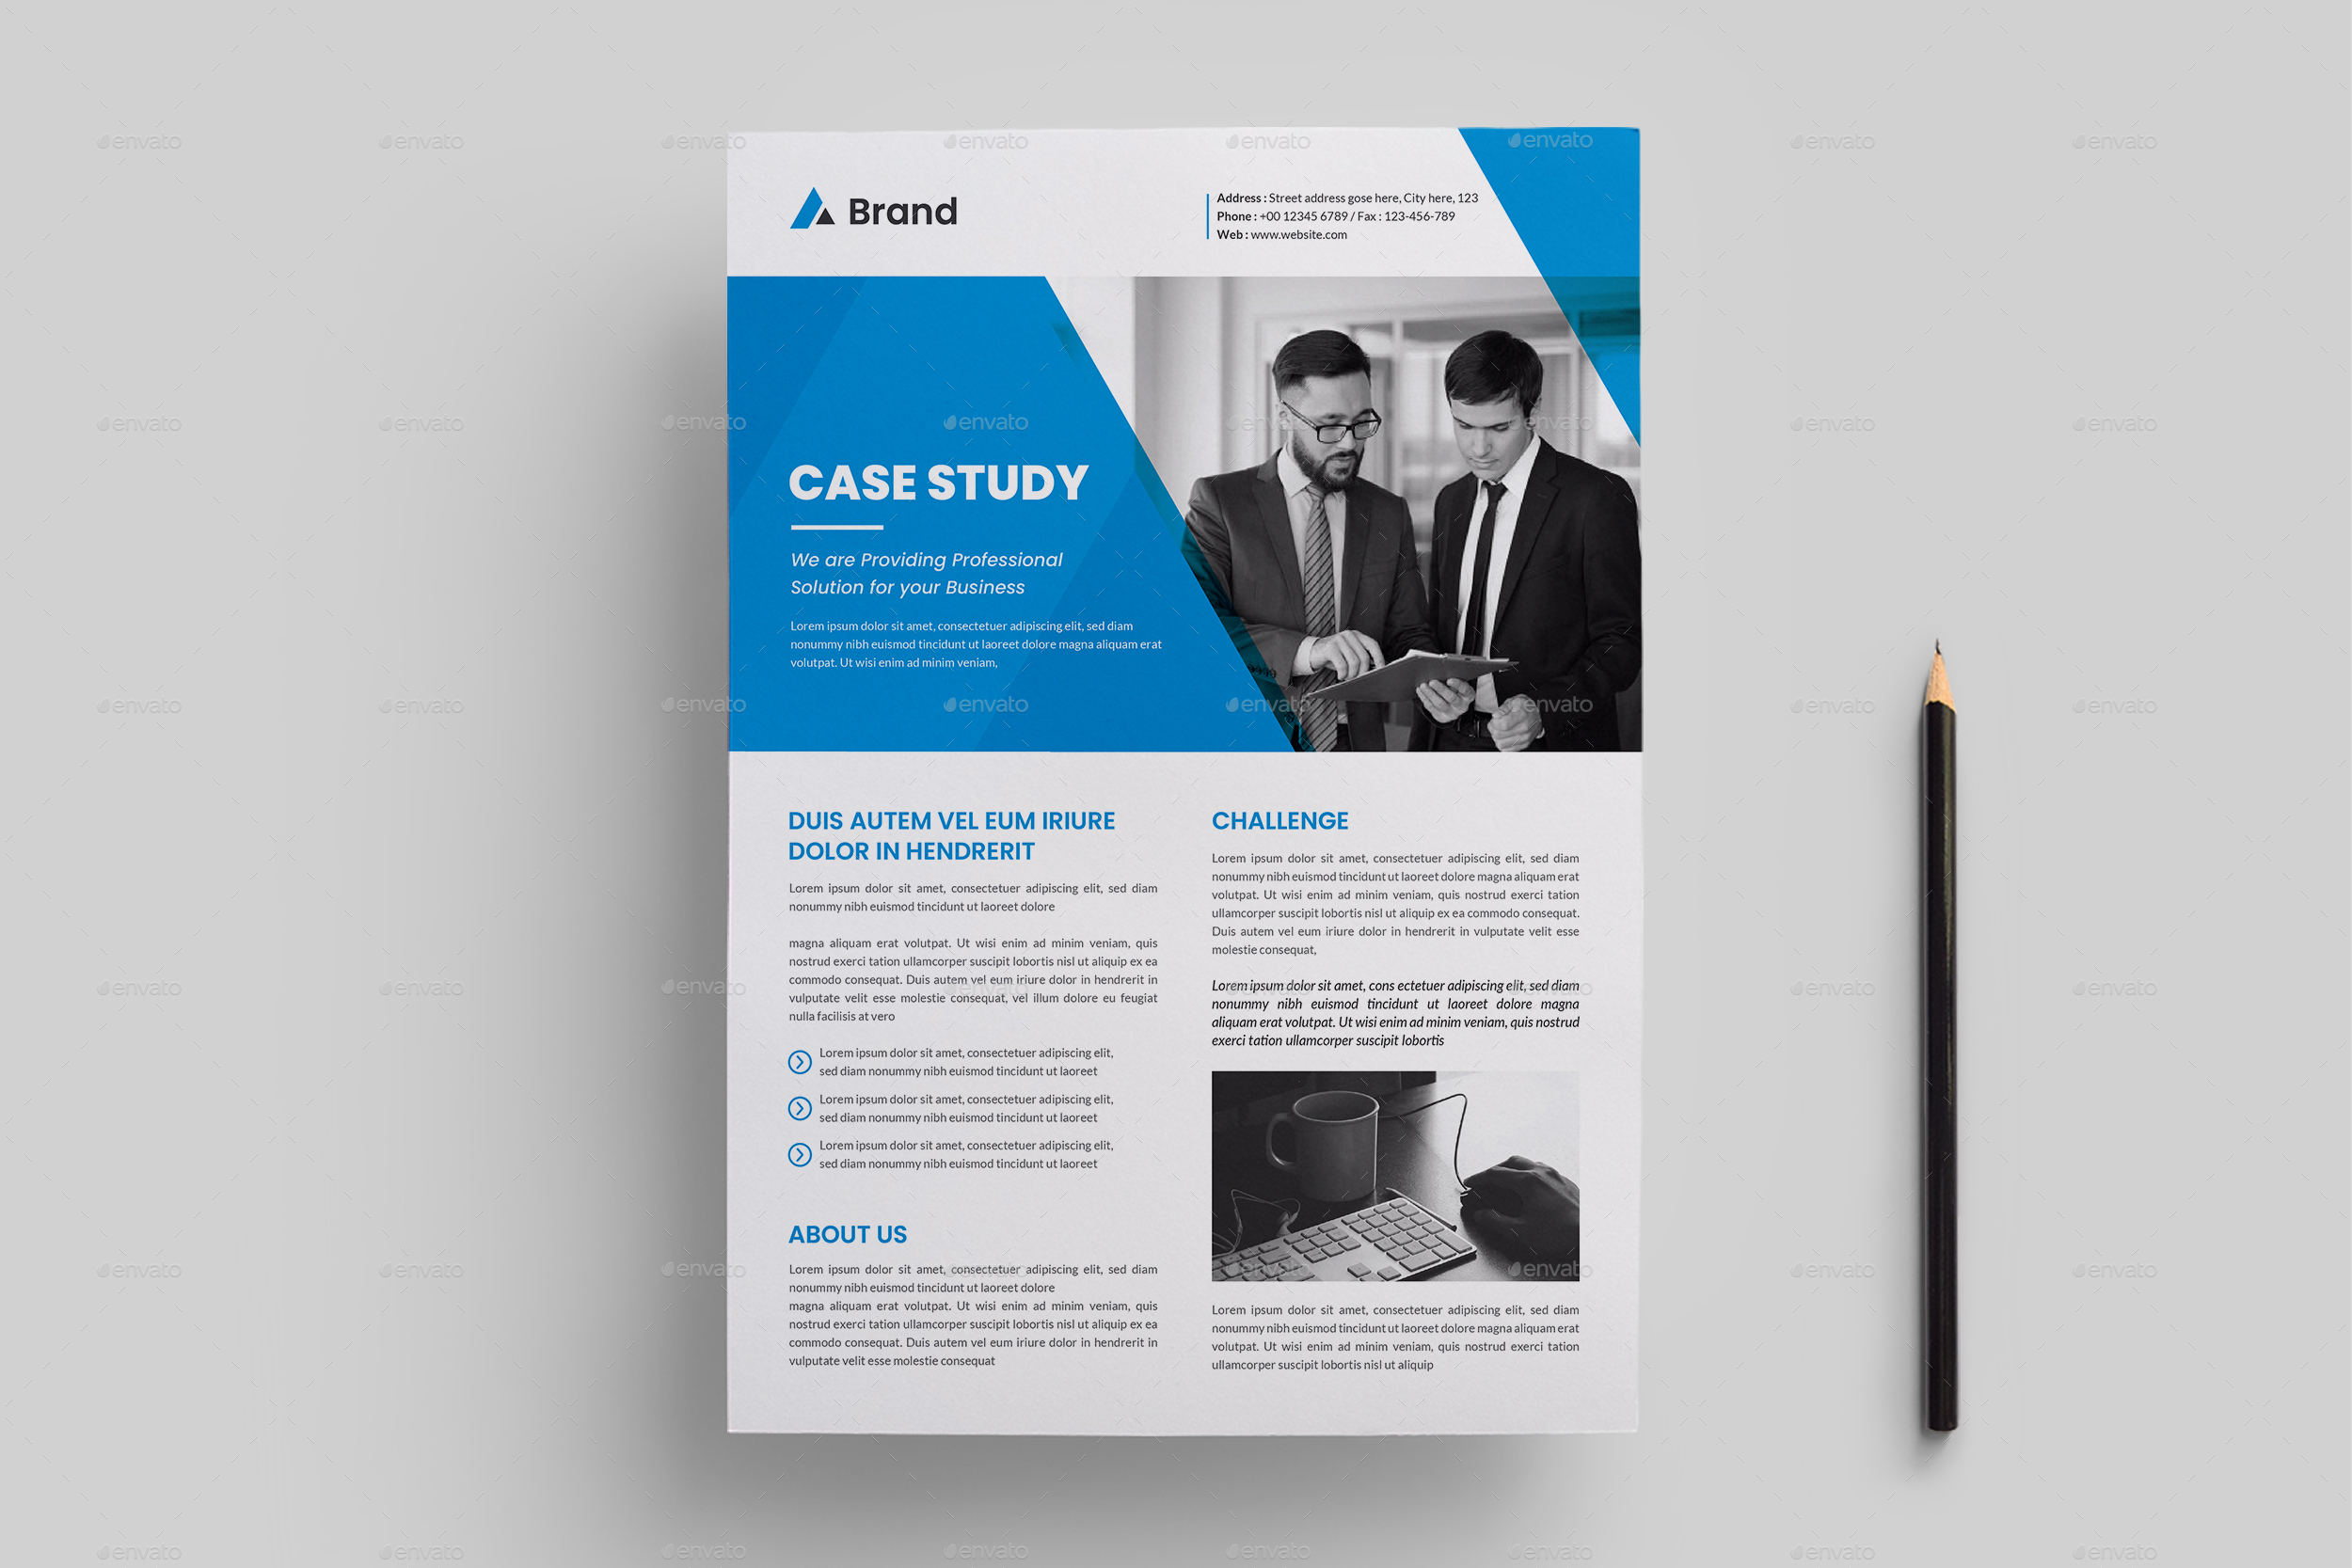 Case Study Template, Print Templates | GraphicRiver